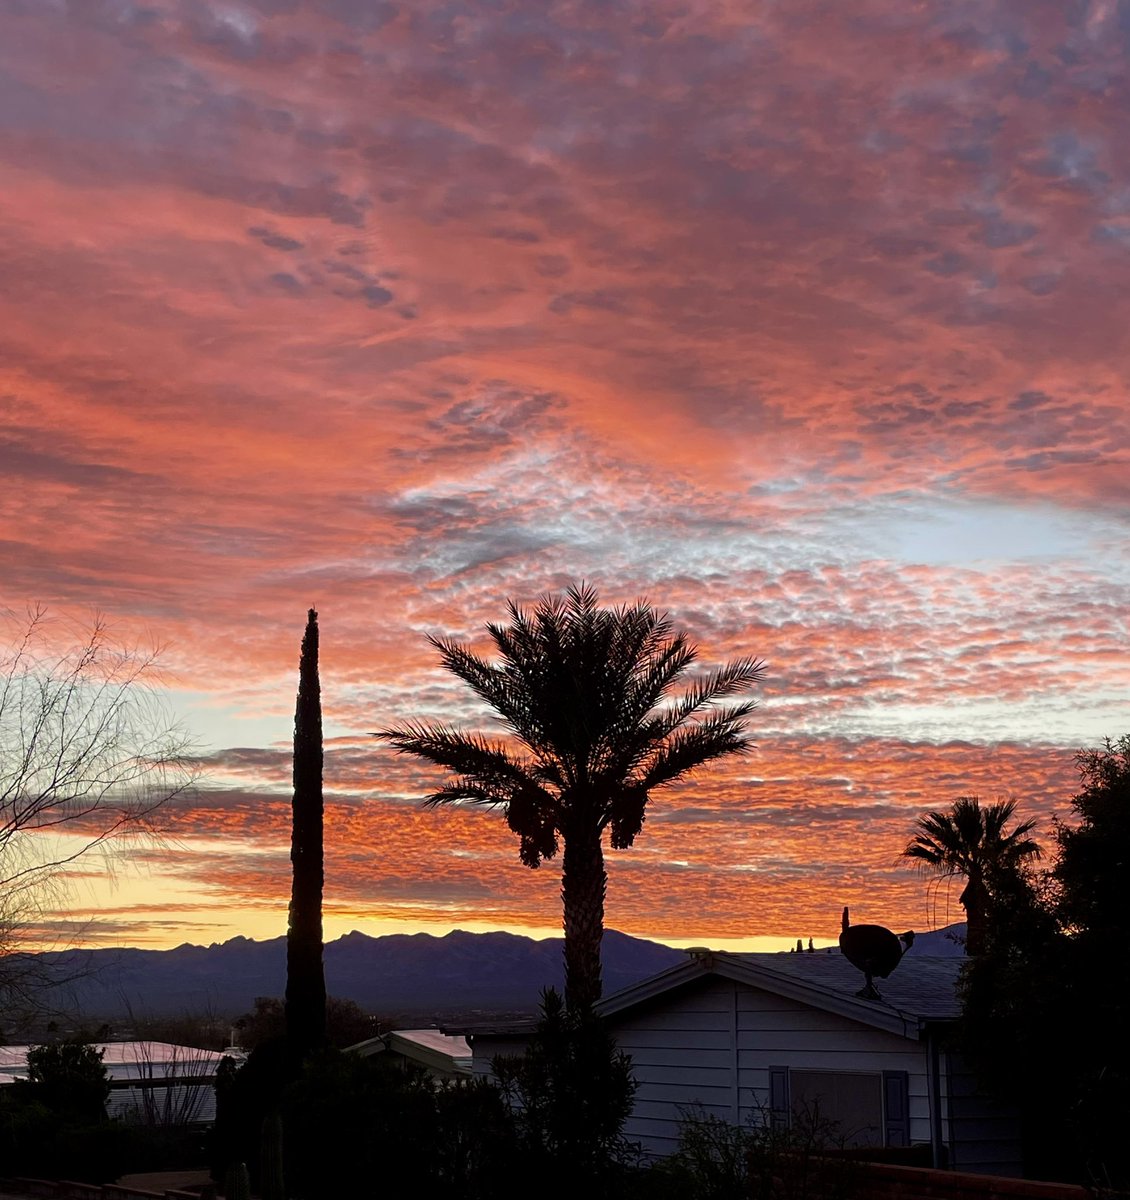 This morning’s #sunrise #arizona #greenvalley